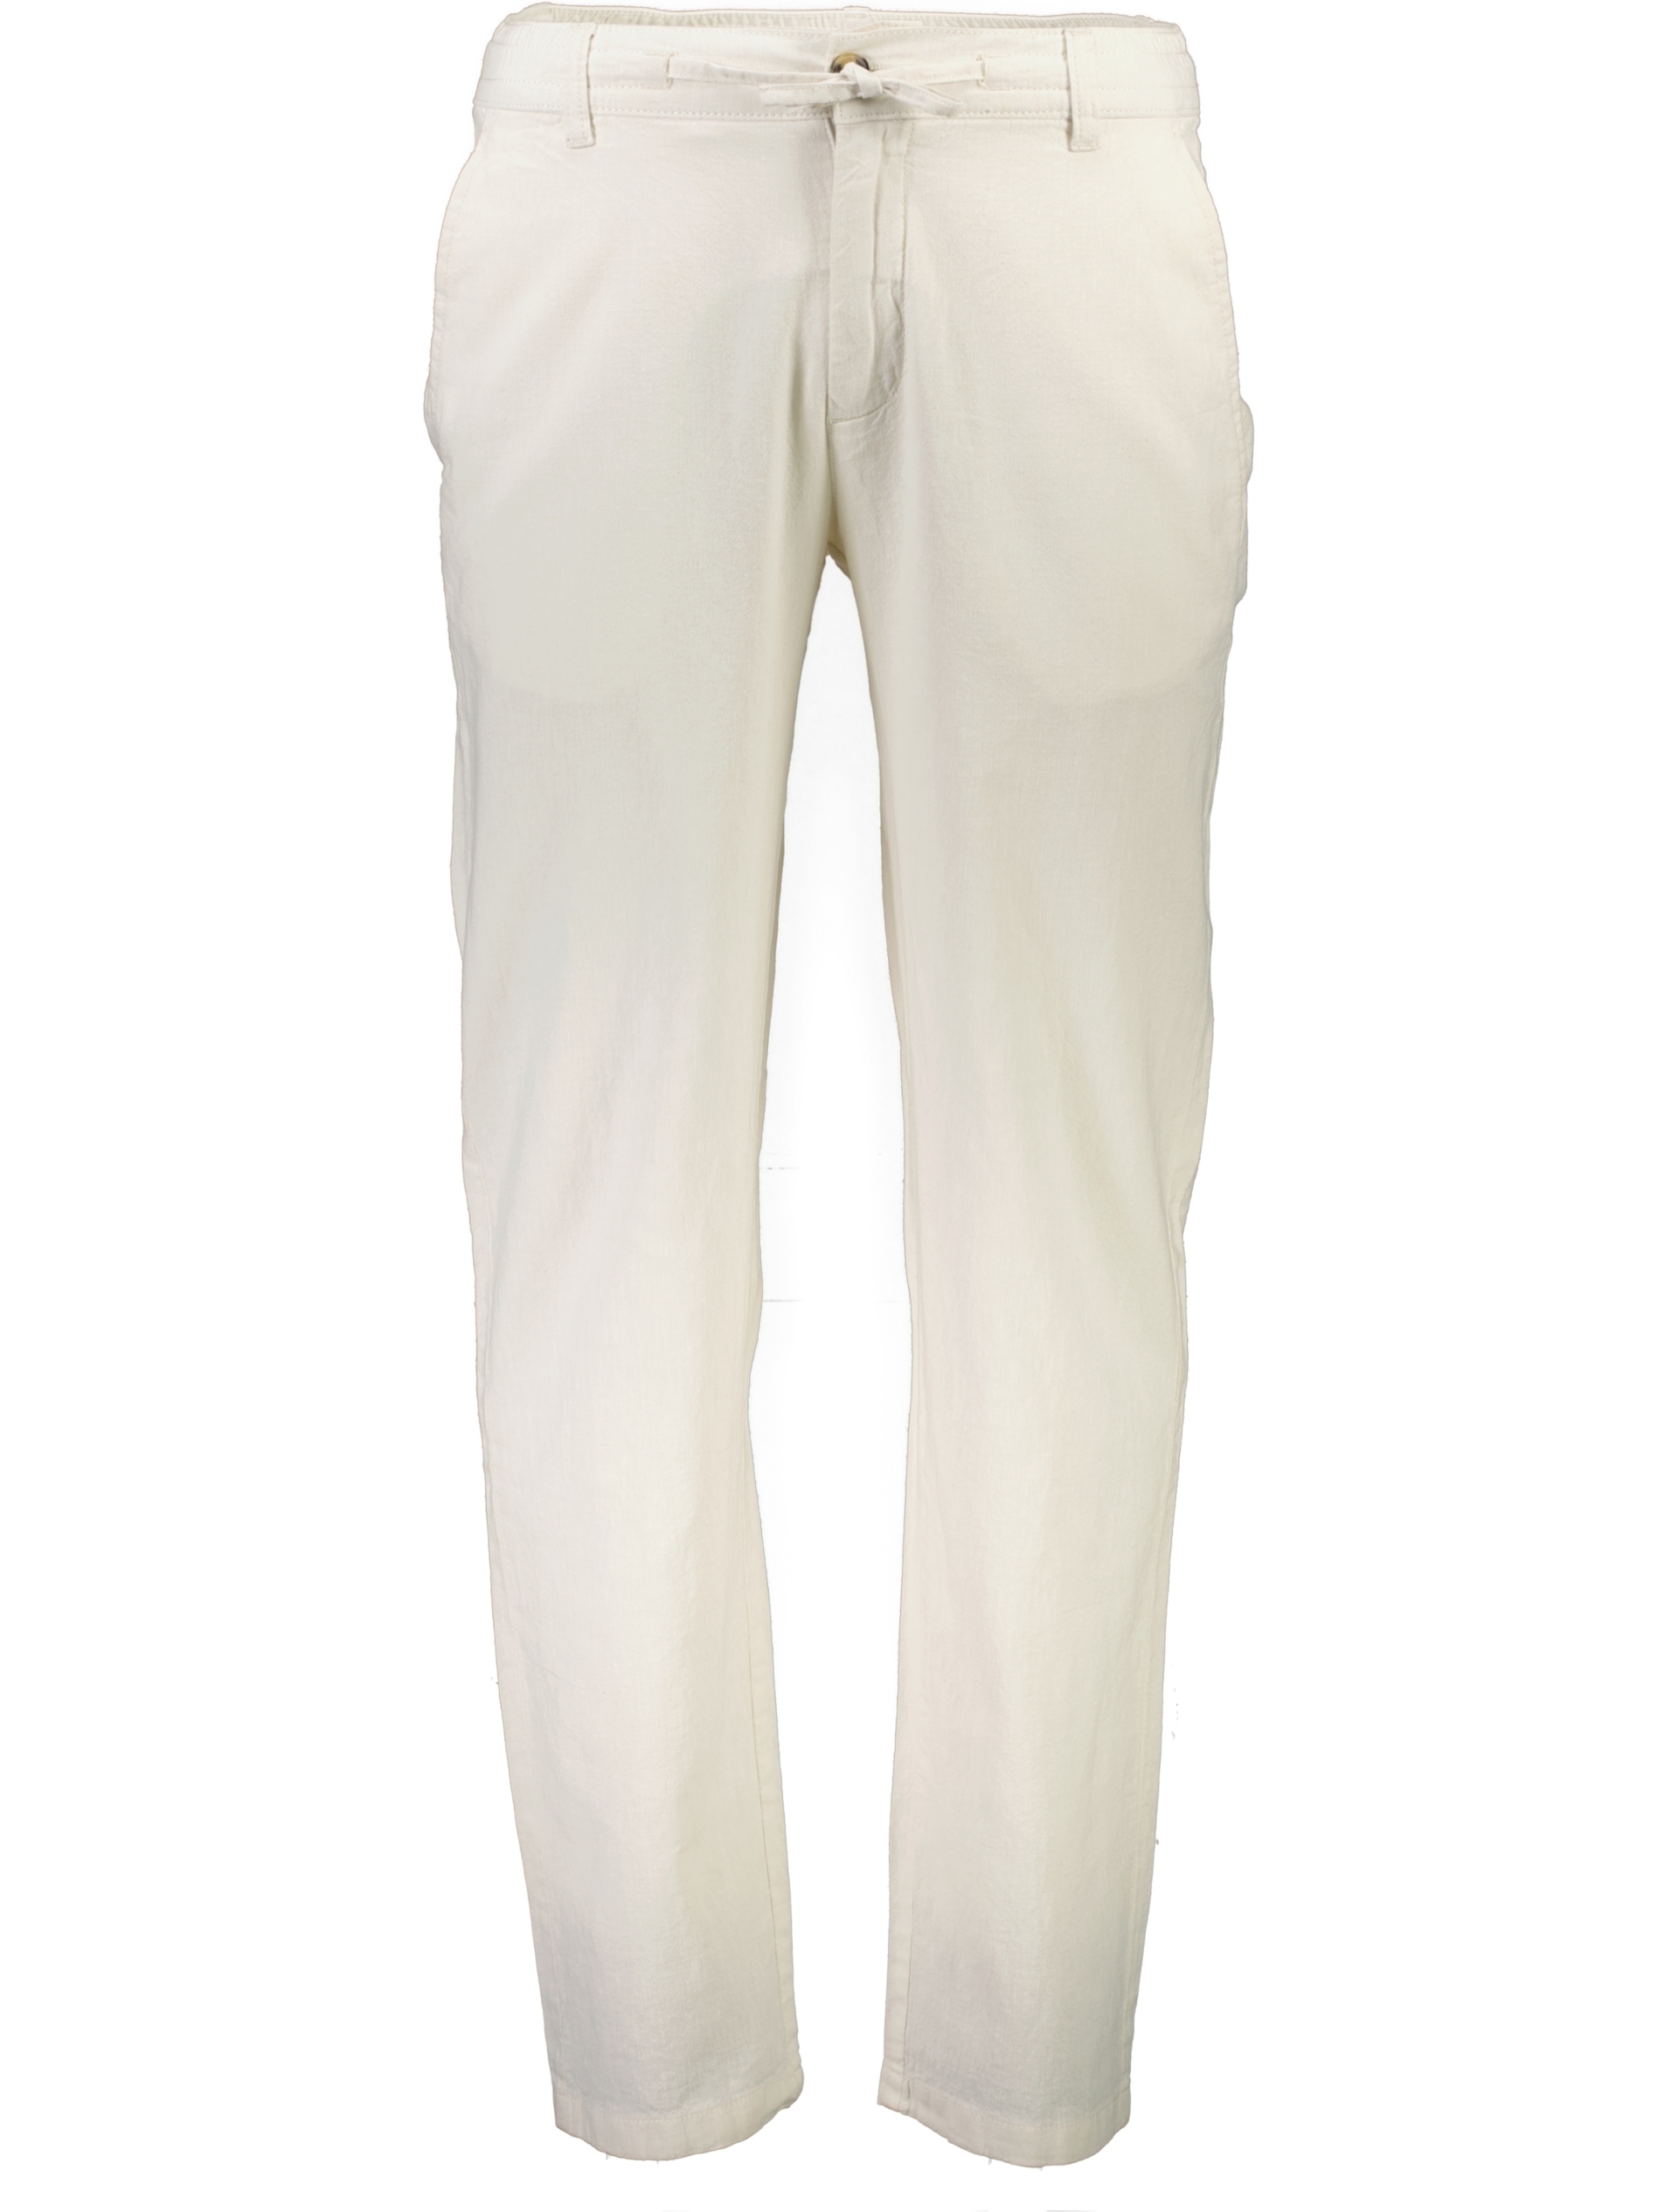 Lindbergh Linen pants white / white